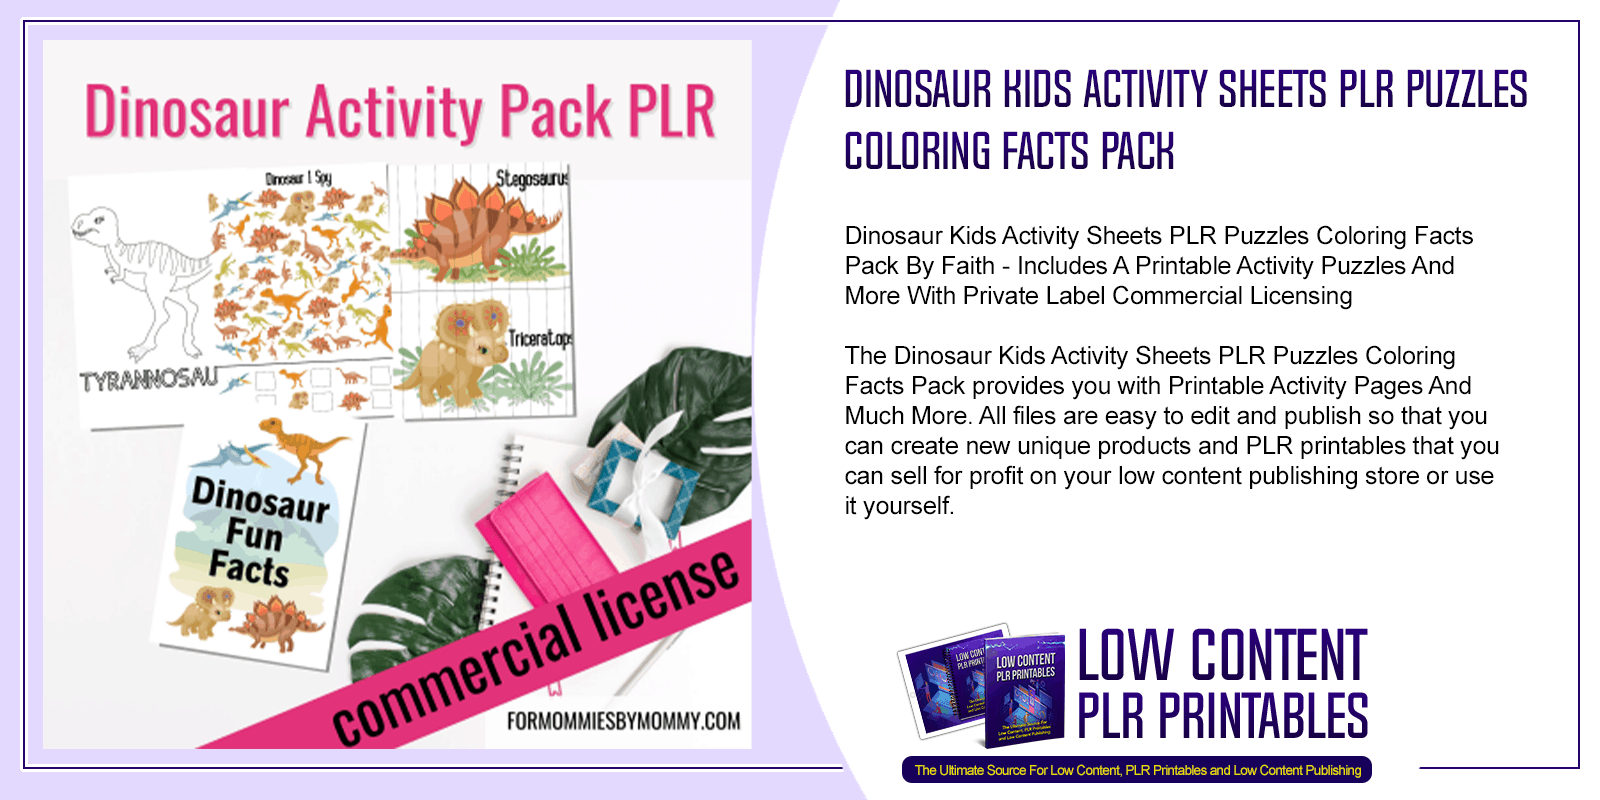 Dinosaur Kids Activity Sheets PLR Puzzles Coloring Facts Pack